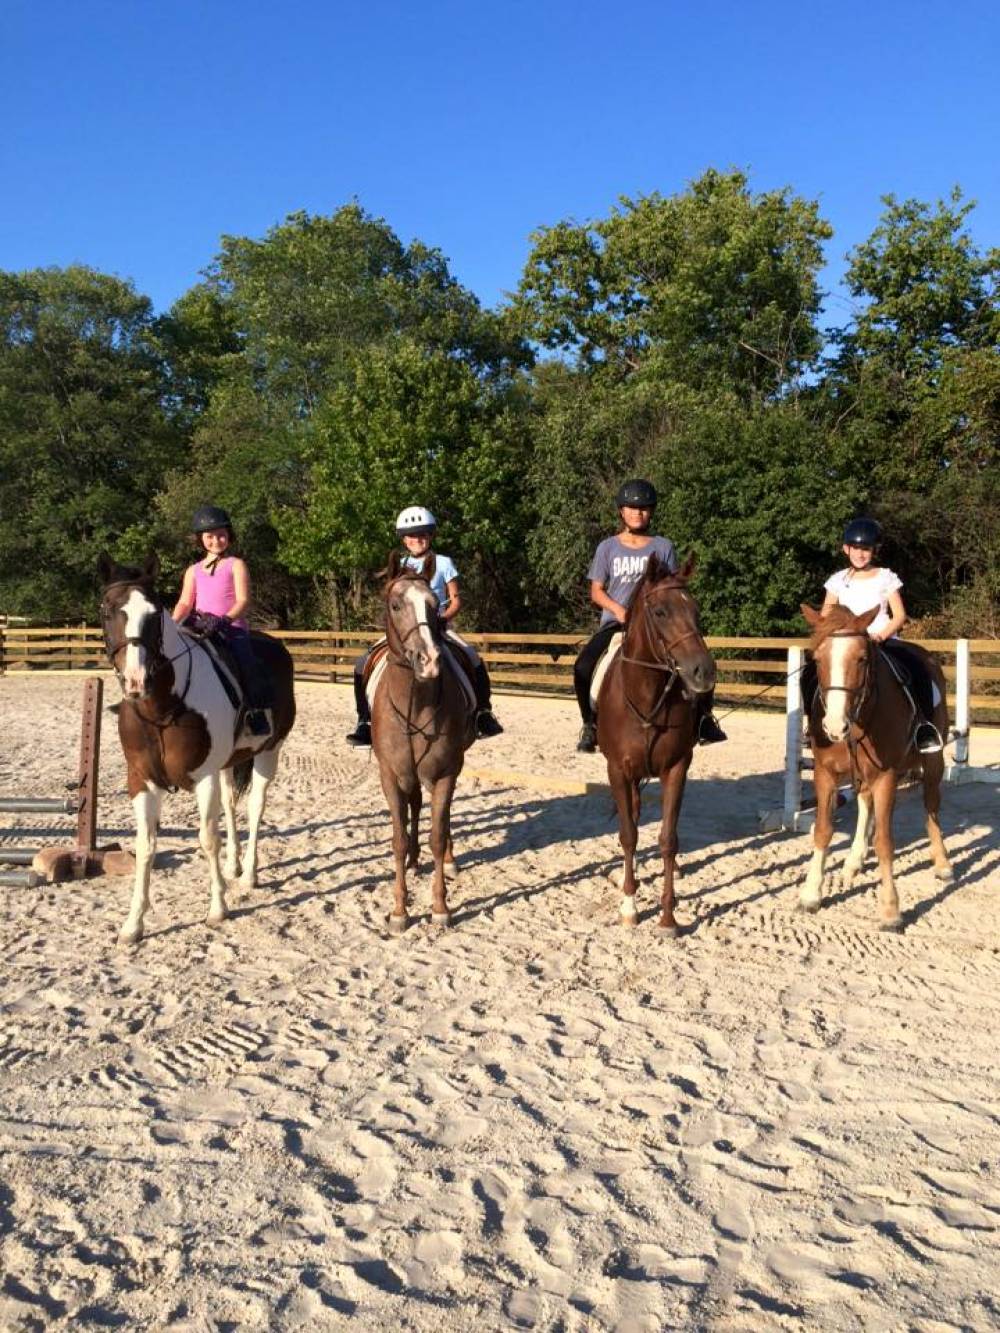 TOP ILLINOIS HORSE RIDING CAMP: Windridge Farm Summer Horse Camp is a Top Horse Riding Summer Camp located in Bolingbrook Illinois offering many fun and enriching Horse Riding and other camp programs. 